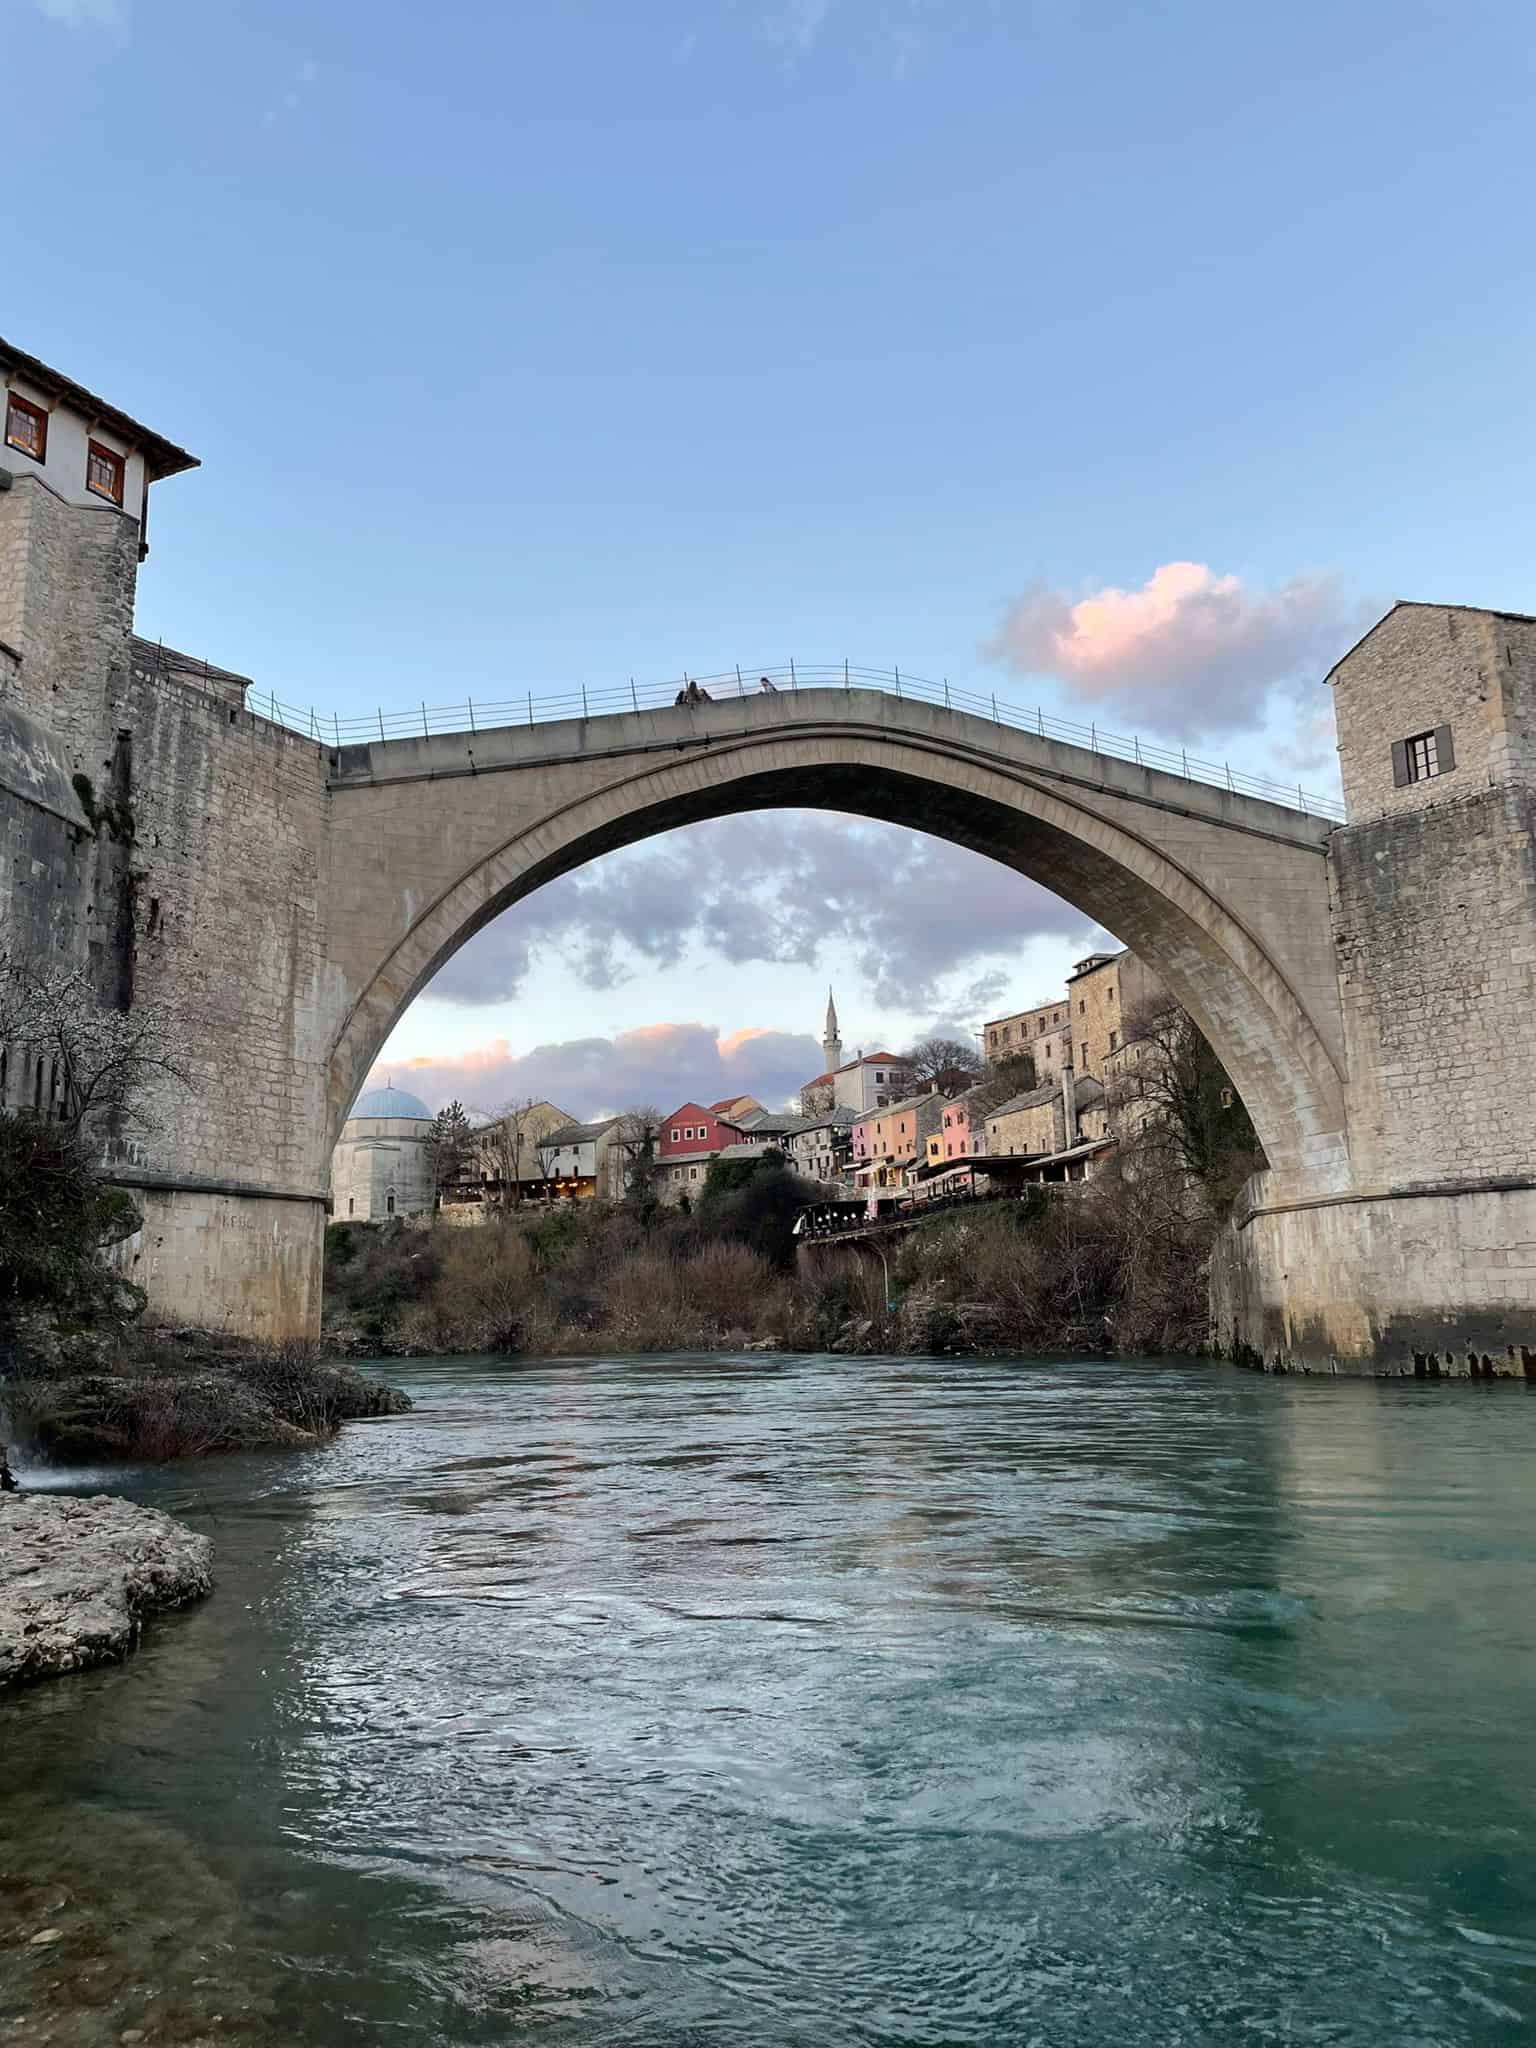 Stari Most, a famous bridge in Mostar, Bosnia Heregovina, standing over the Neretva River